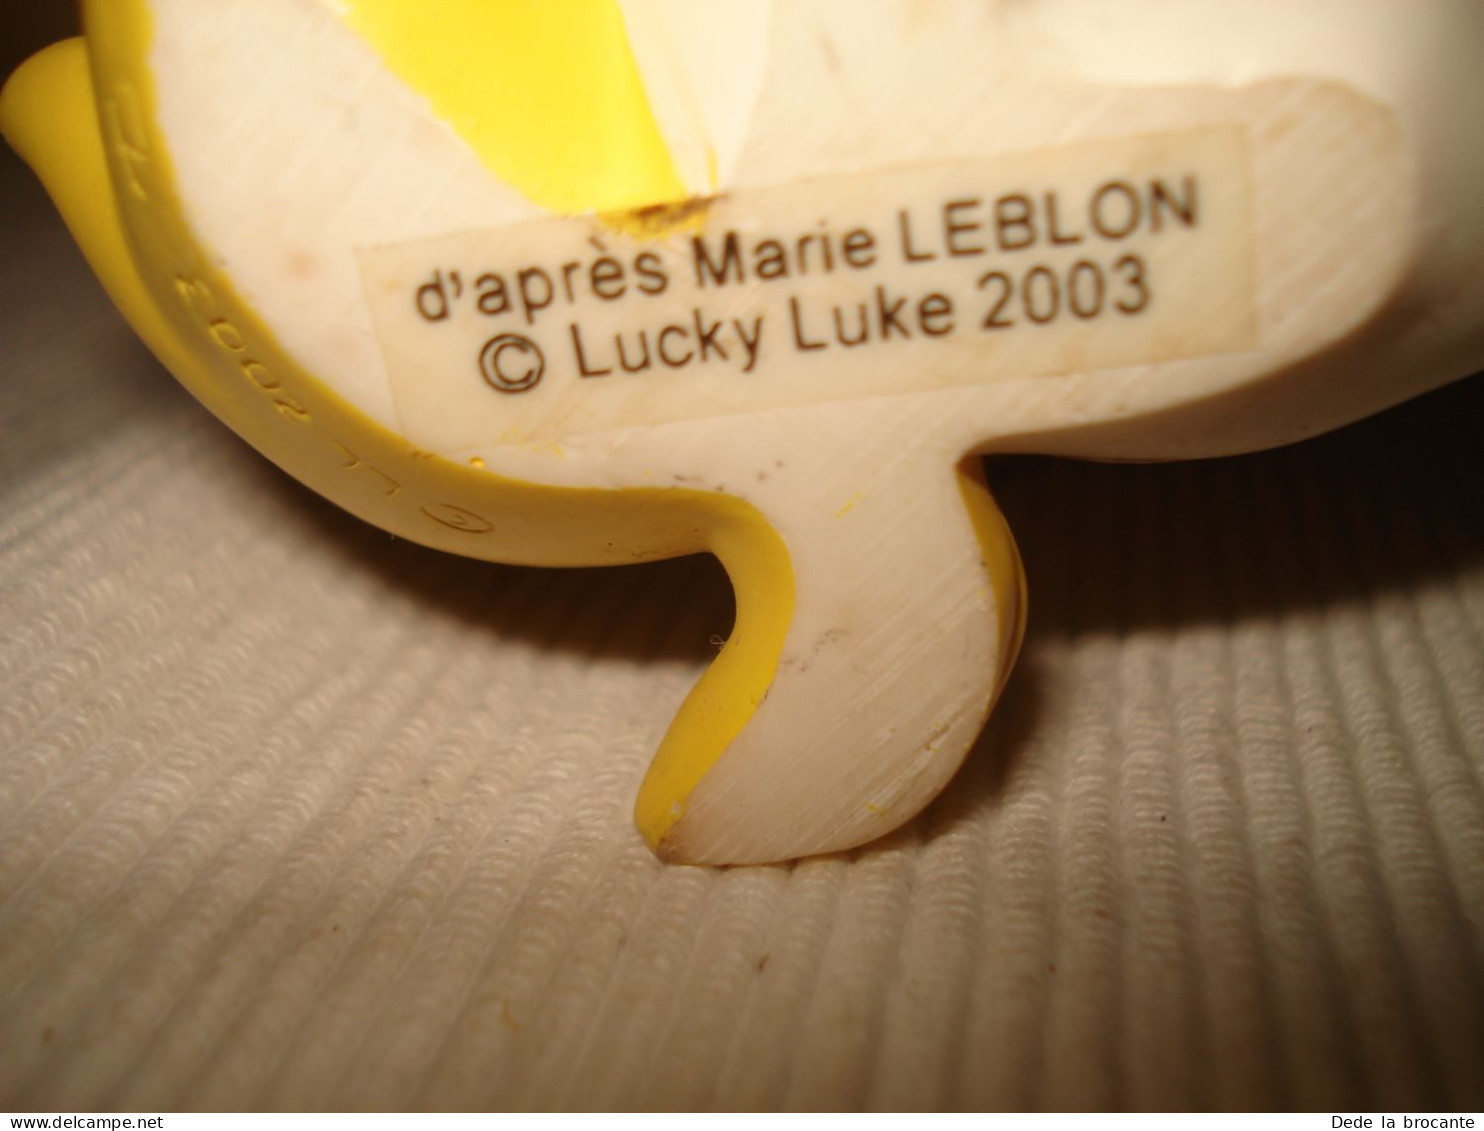 O18 / Lot de 3 figurines lucky Luke - 2003 - D'après Marie Leblon